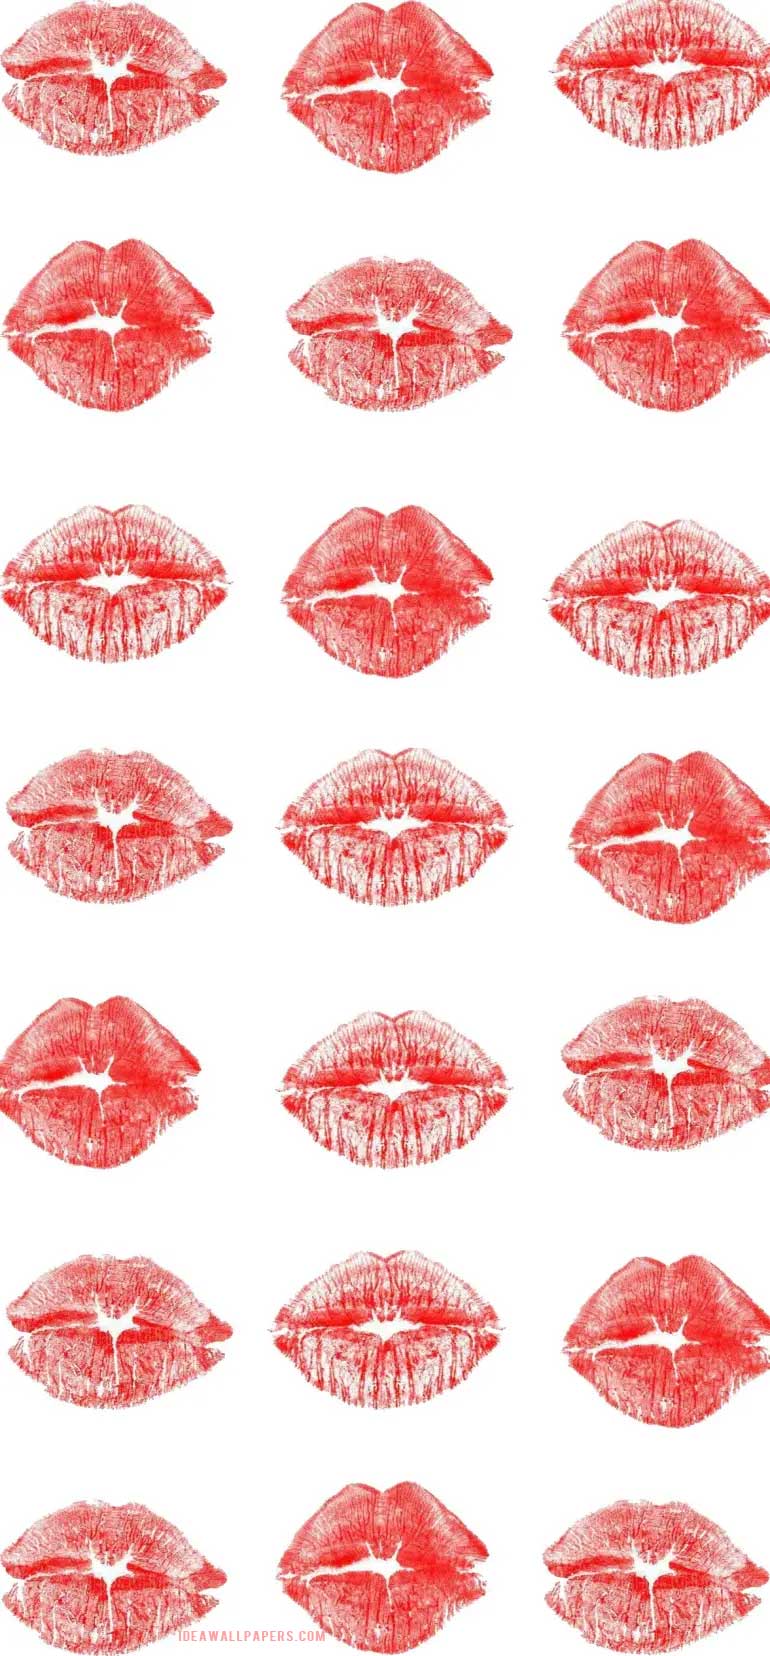 Red lip prints Wallpaper